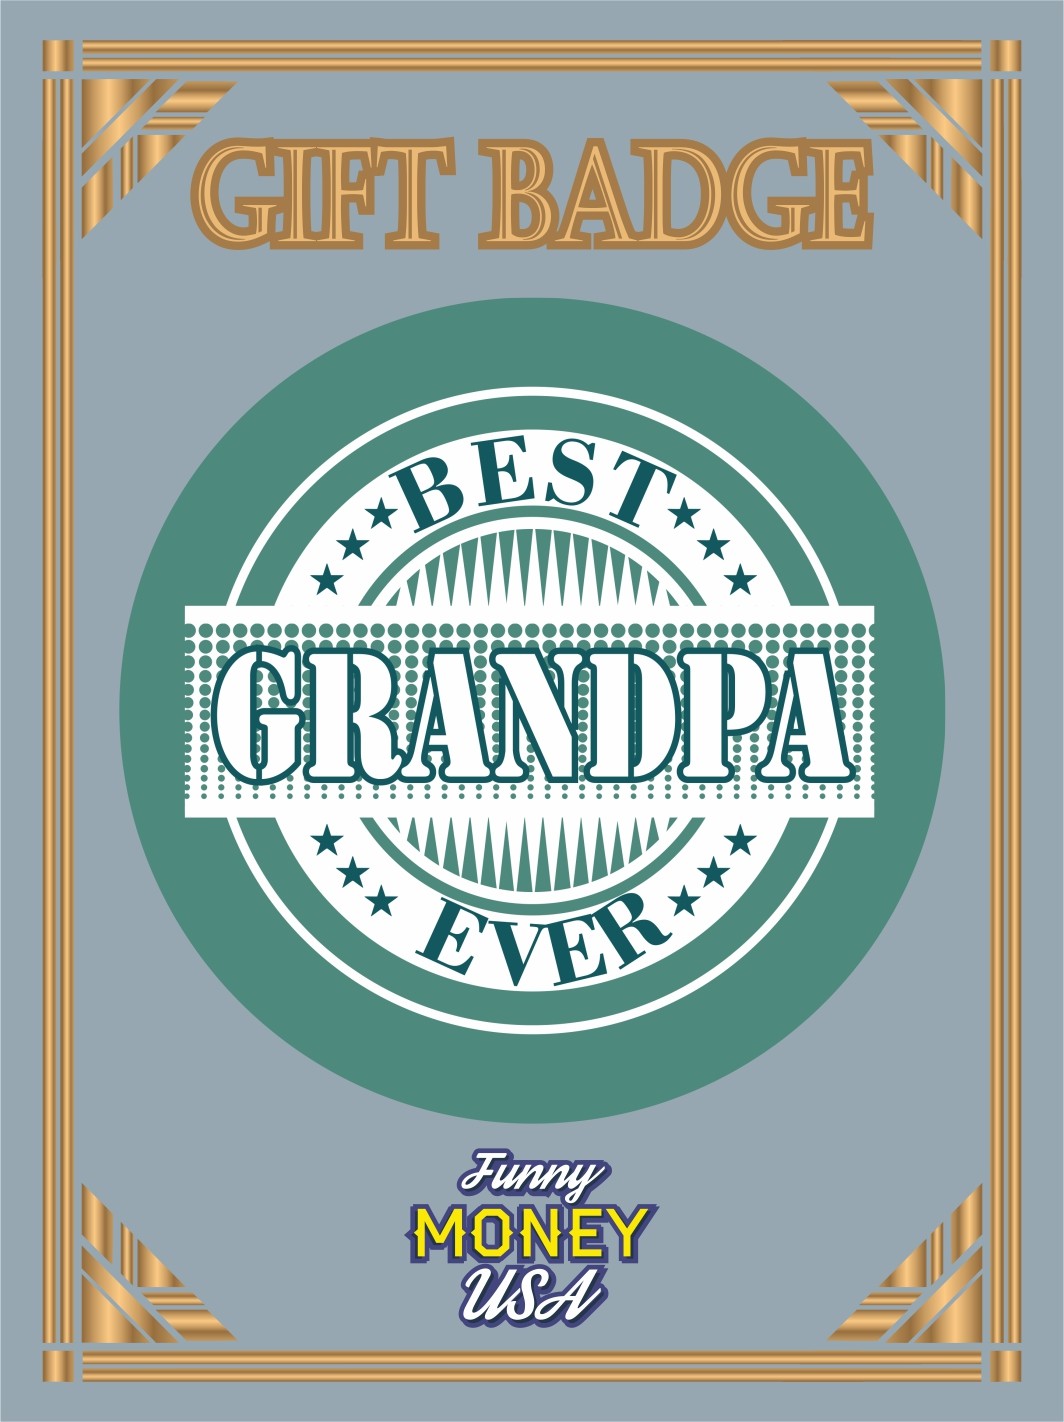 Gift badges "Best grandpa ever"